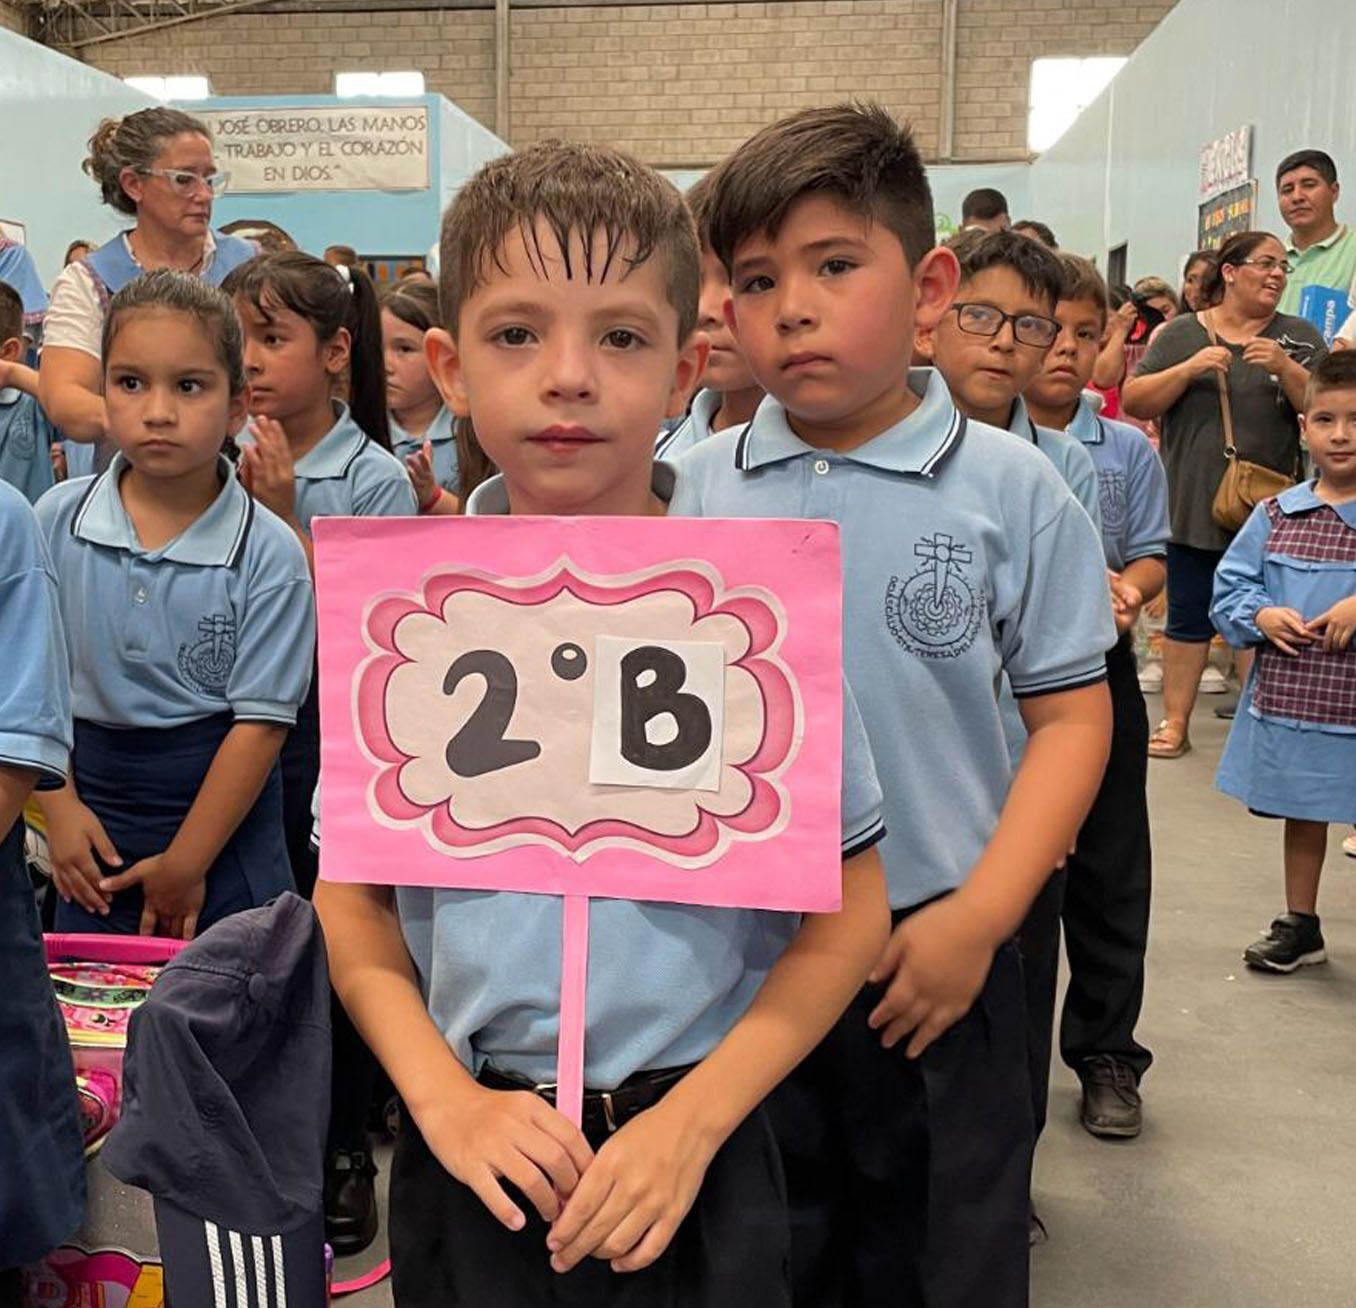 A NEW SCHOOL YEAR FOR THE SANTA TERESITA SCHOOL IN ARGENTINA